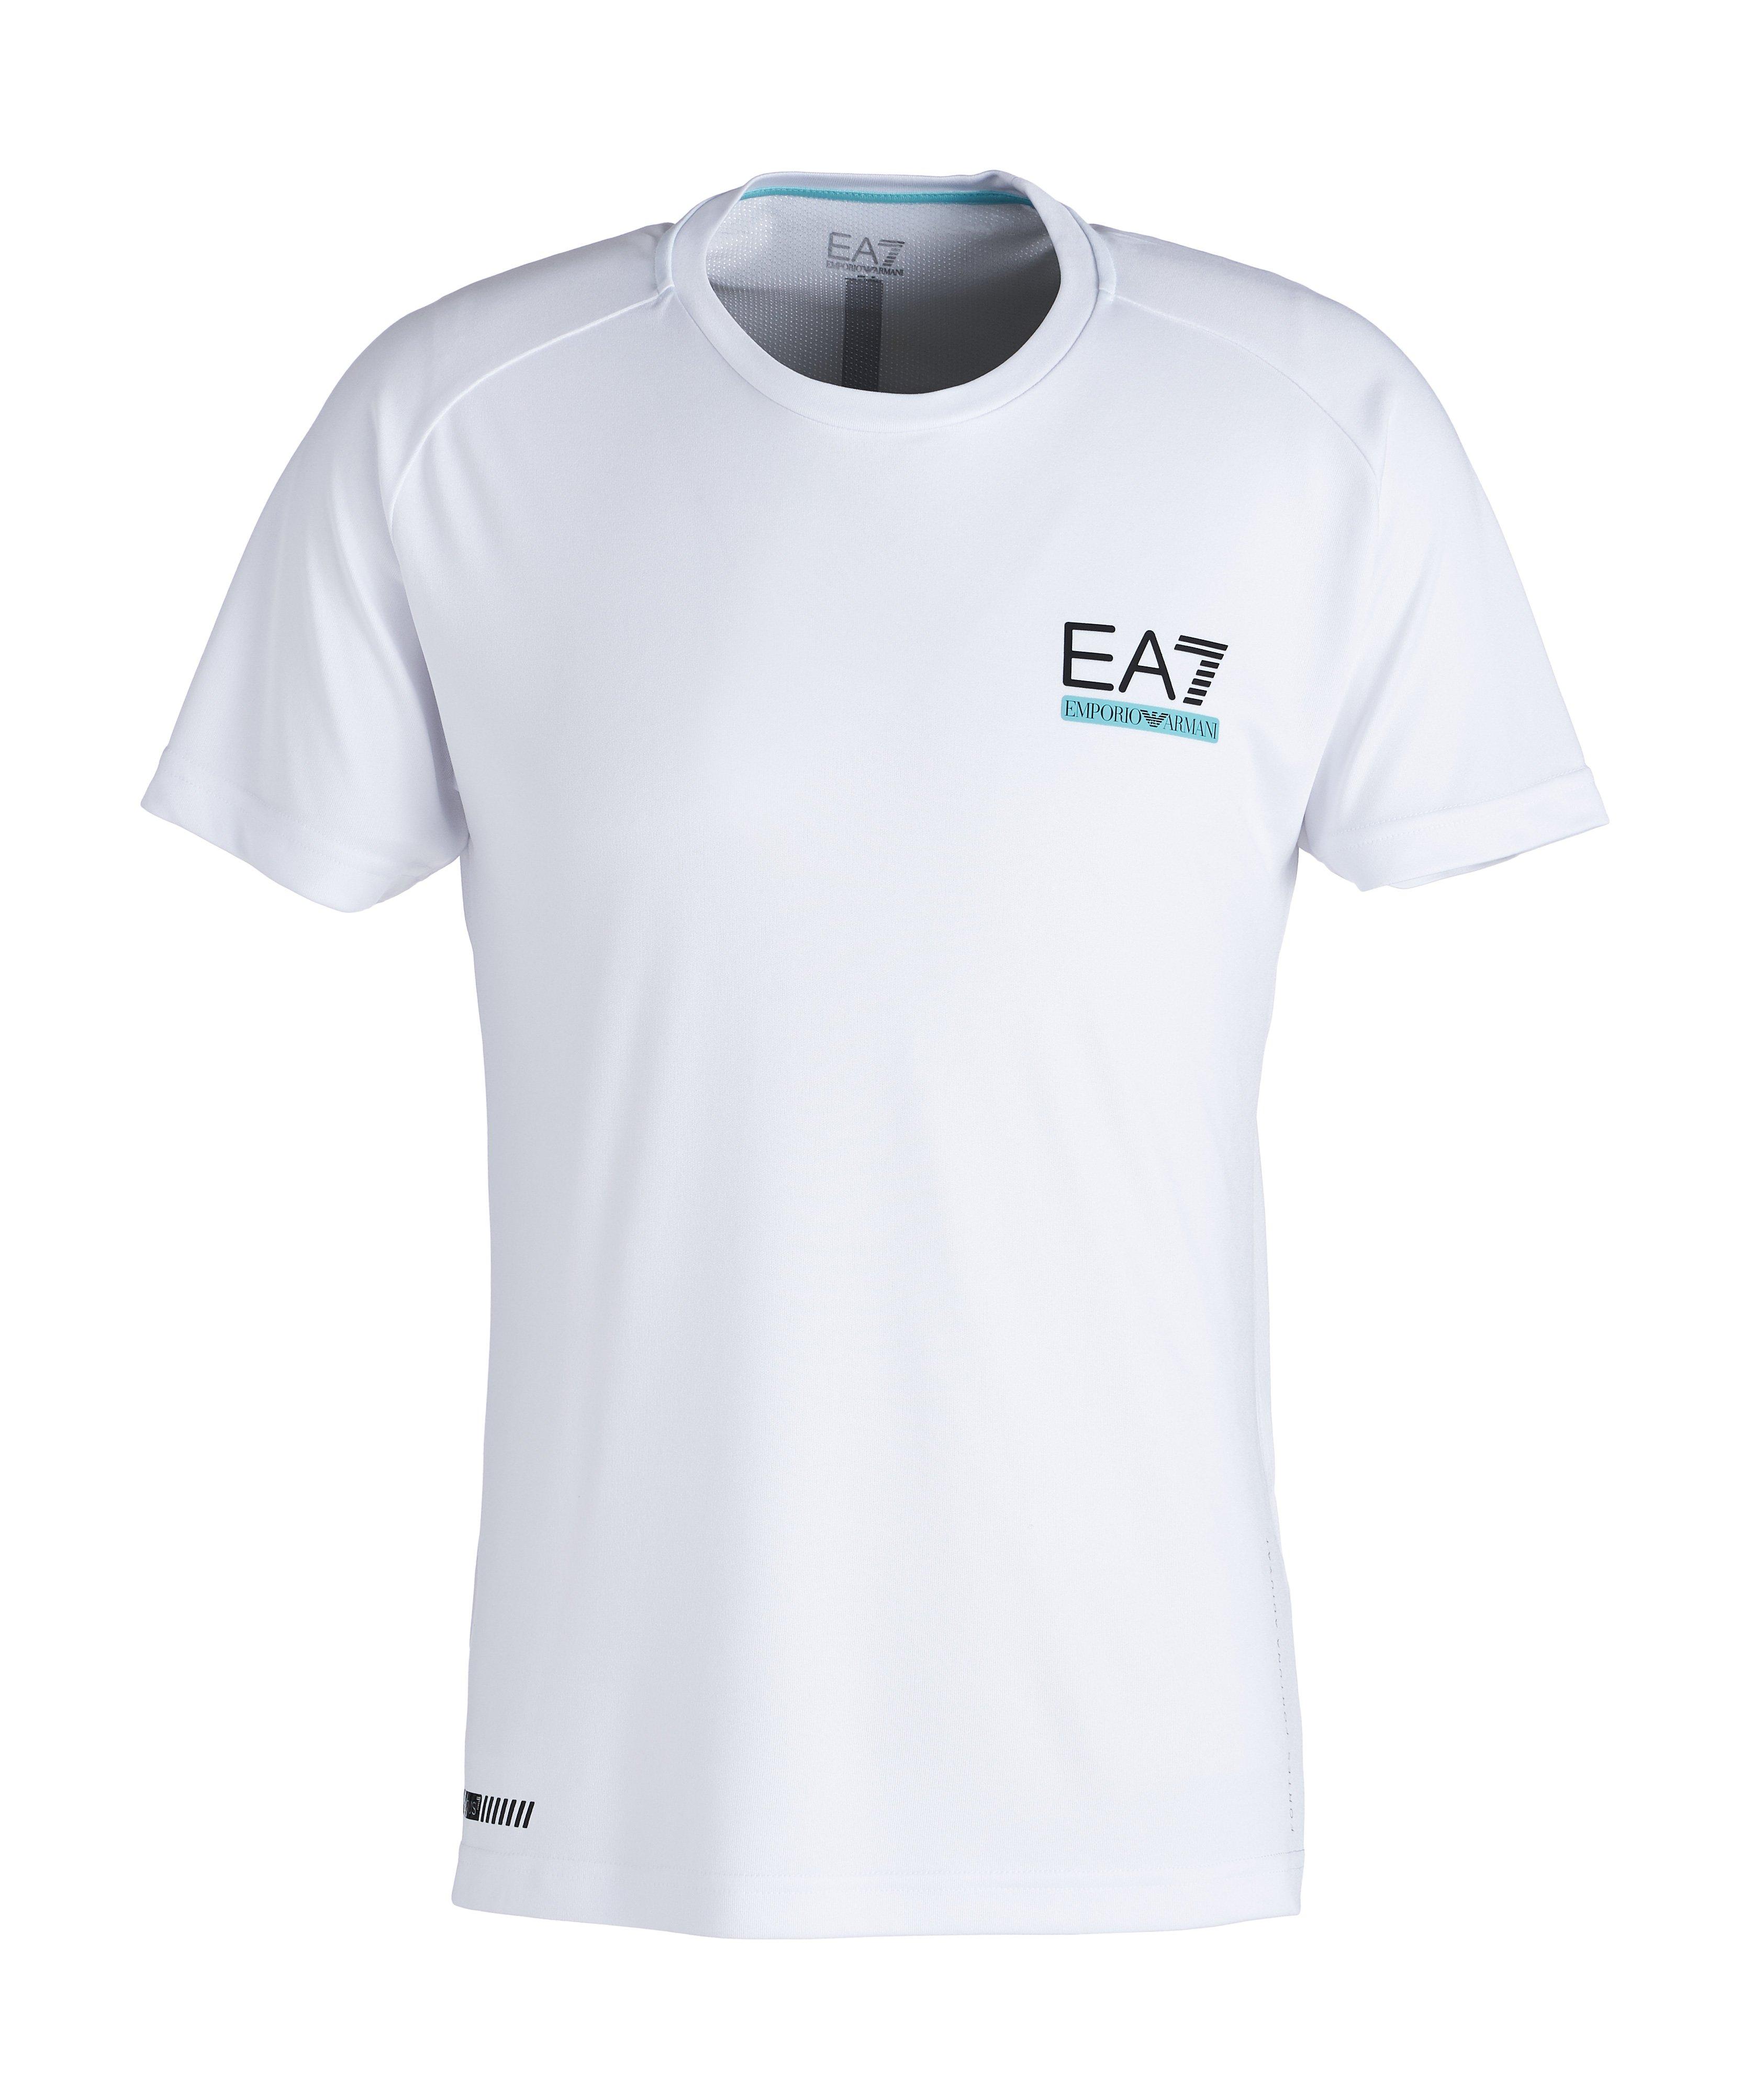 T-shirt avec logo, collection EA7 image 0